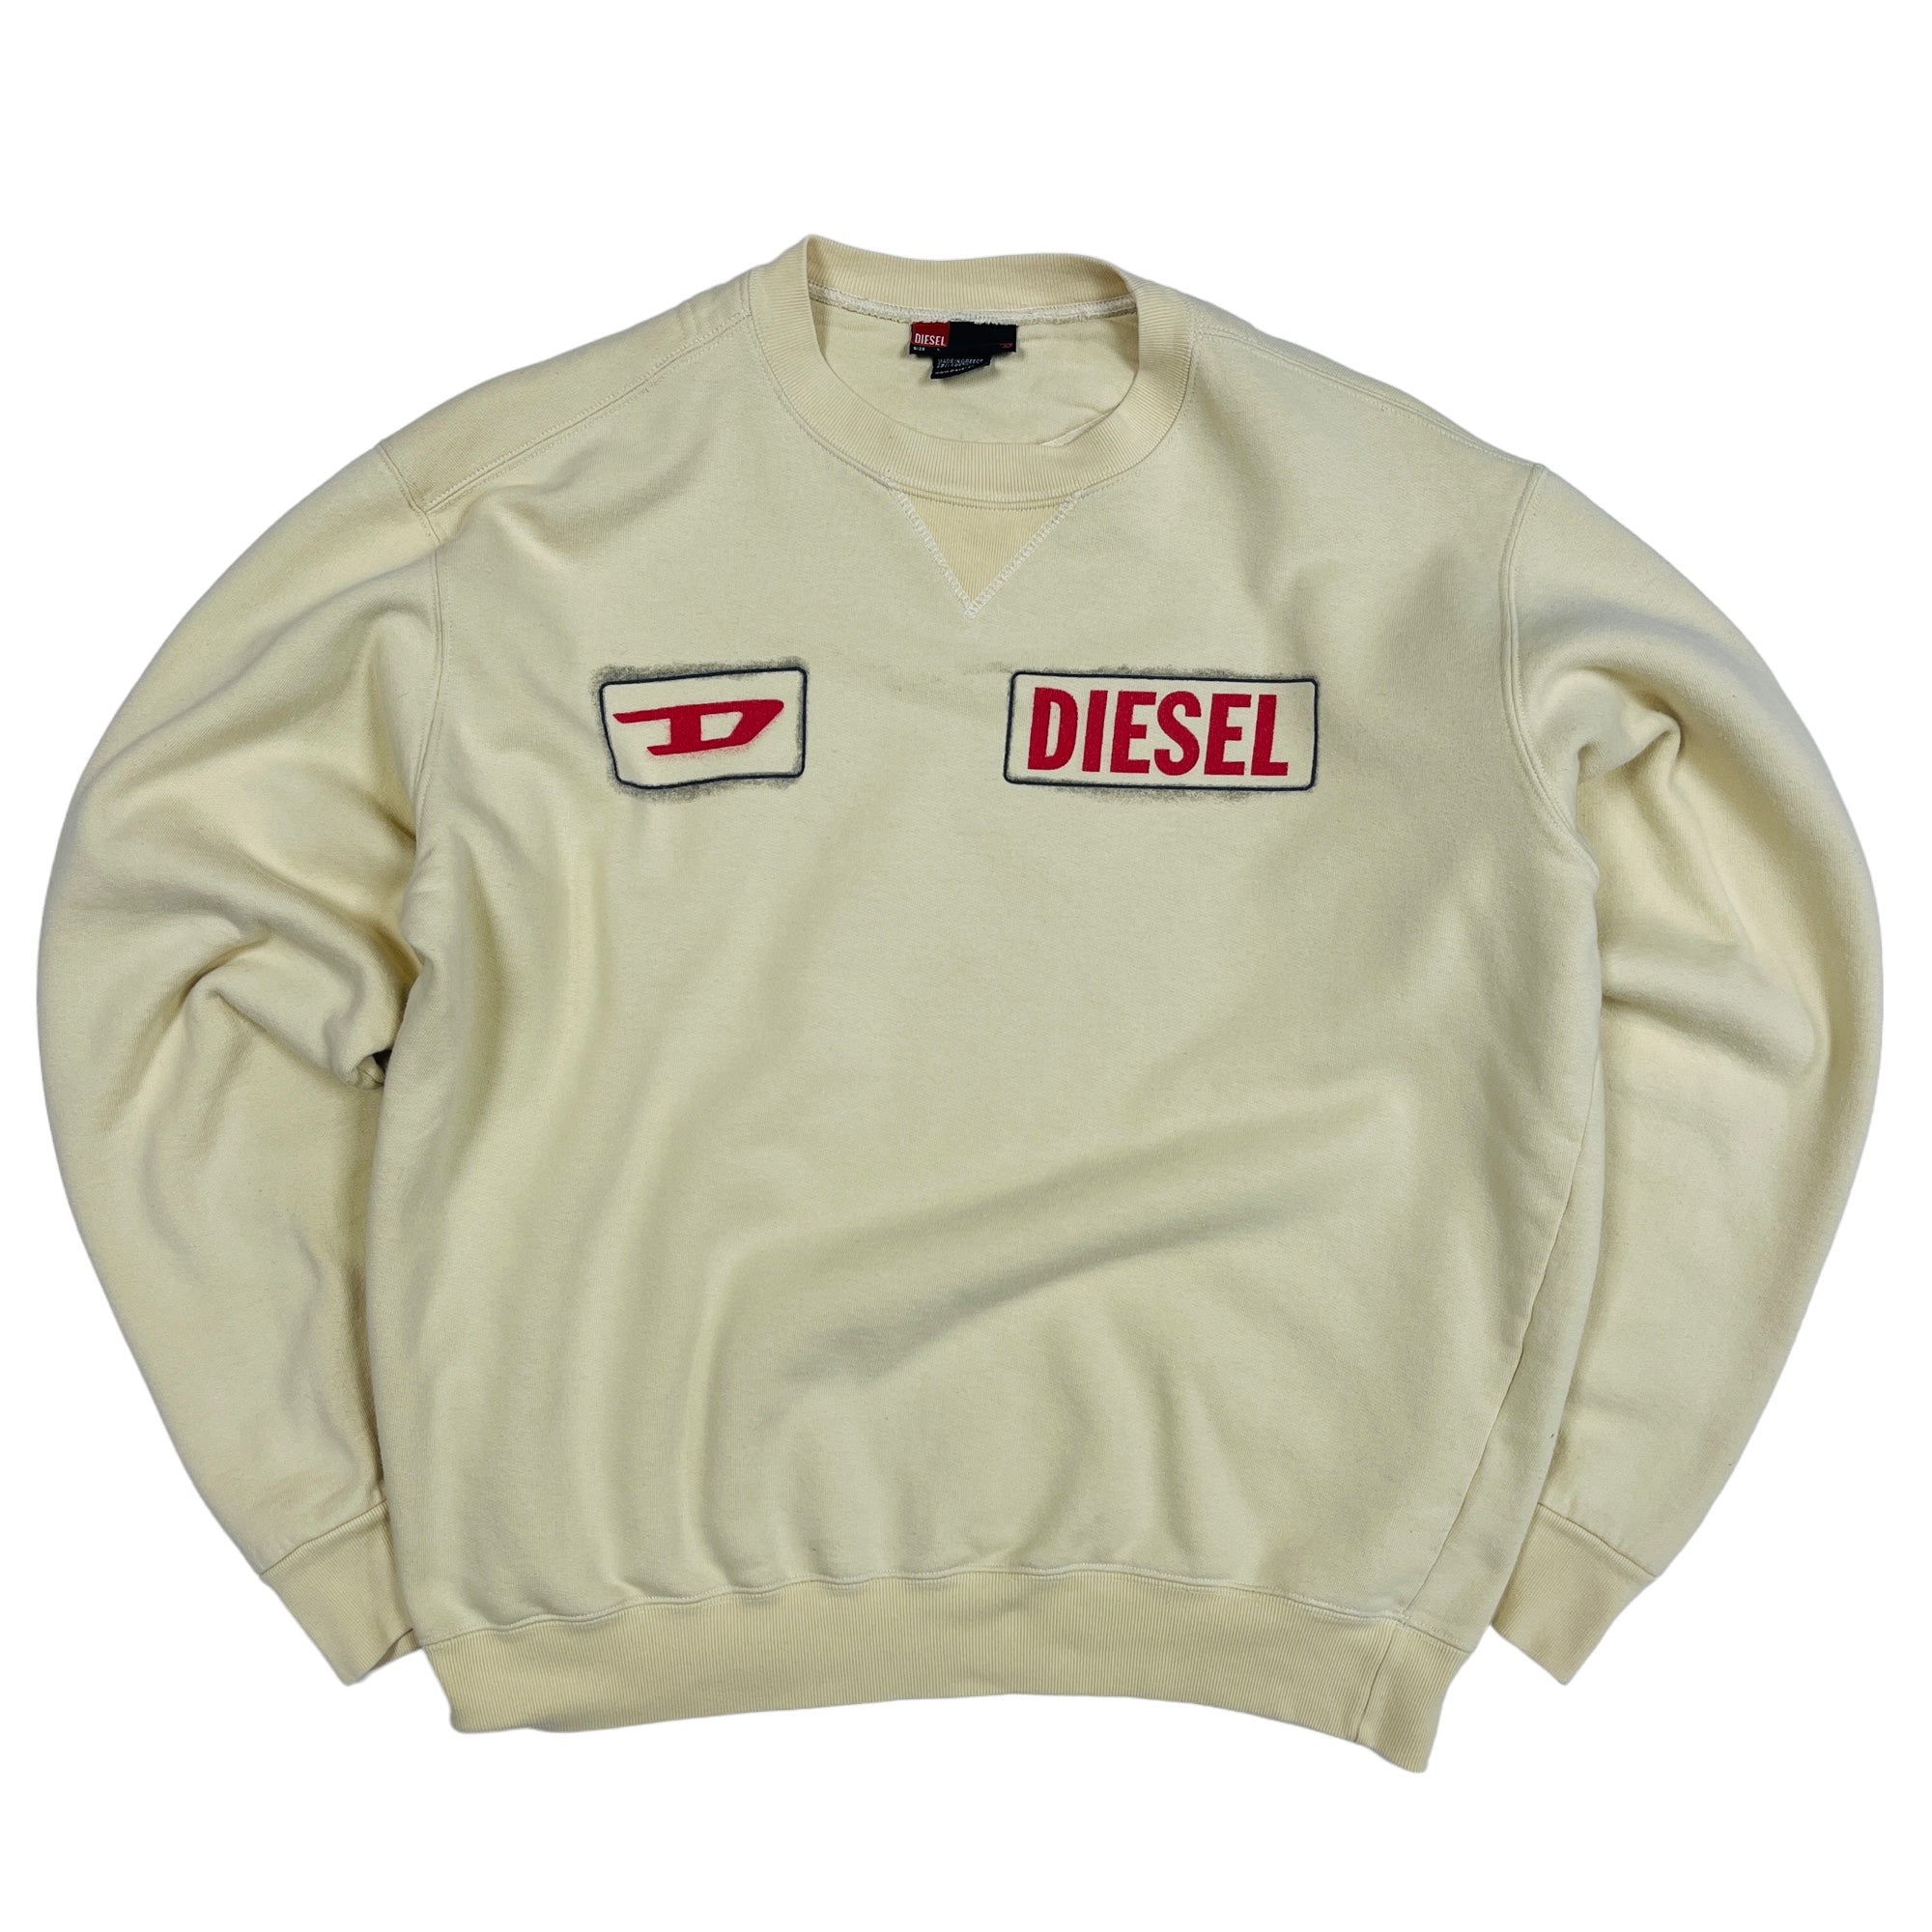 Diesel Sweatshirt - XL